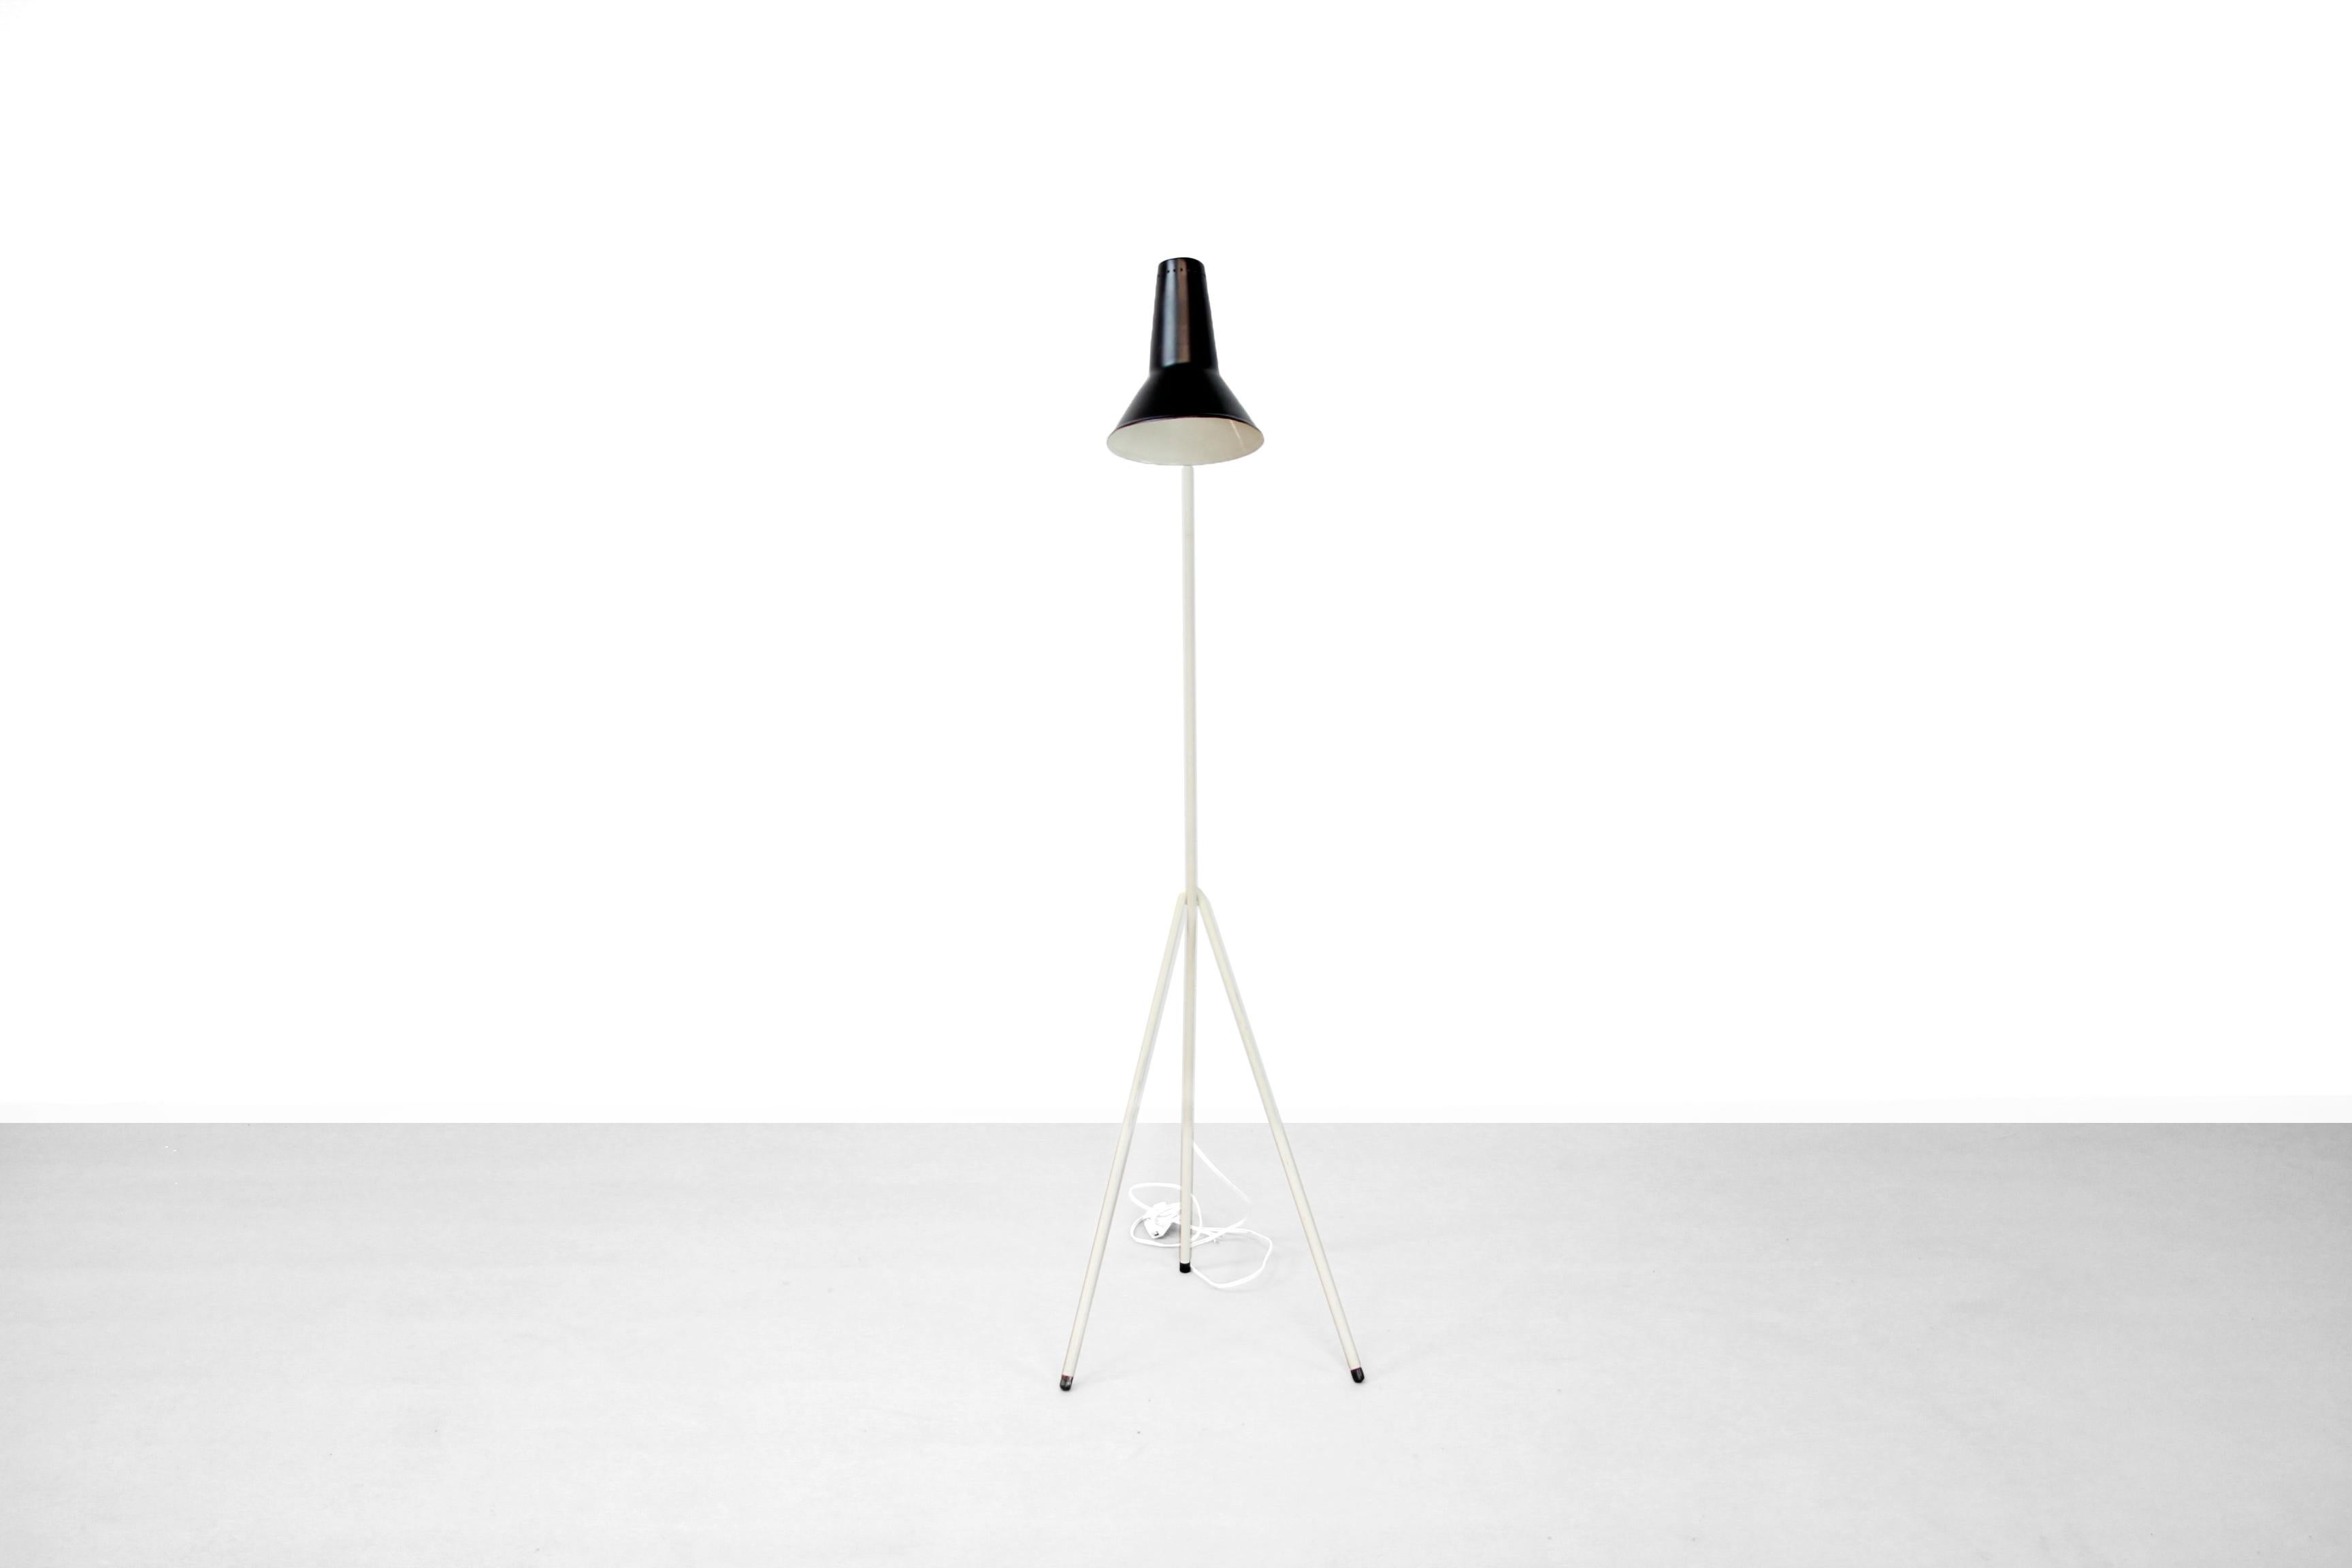 Hard to find Dutch Minimalist floor lamp designed by Willem Hagoort for Hagoort Lighting, in the 1950s the Netherlands. This model is called model 333. Beautiful sleek modernist design 